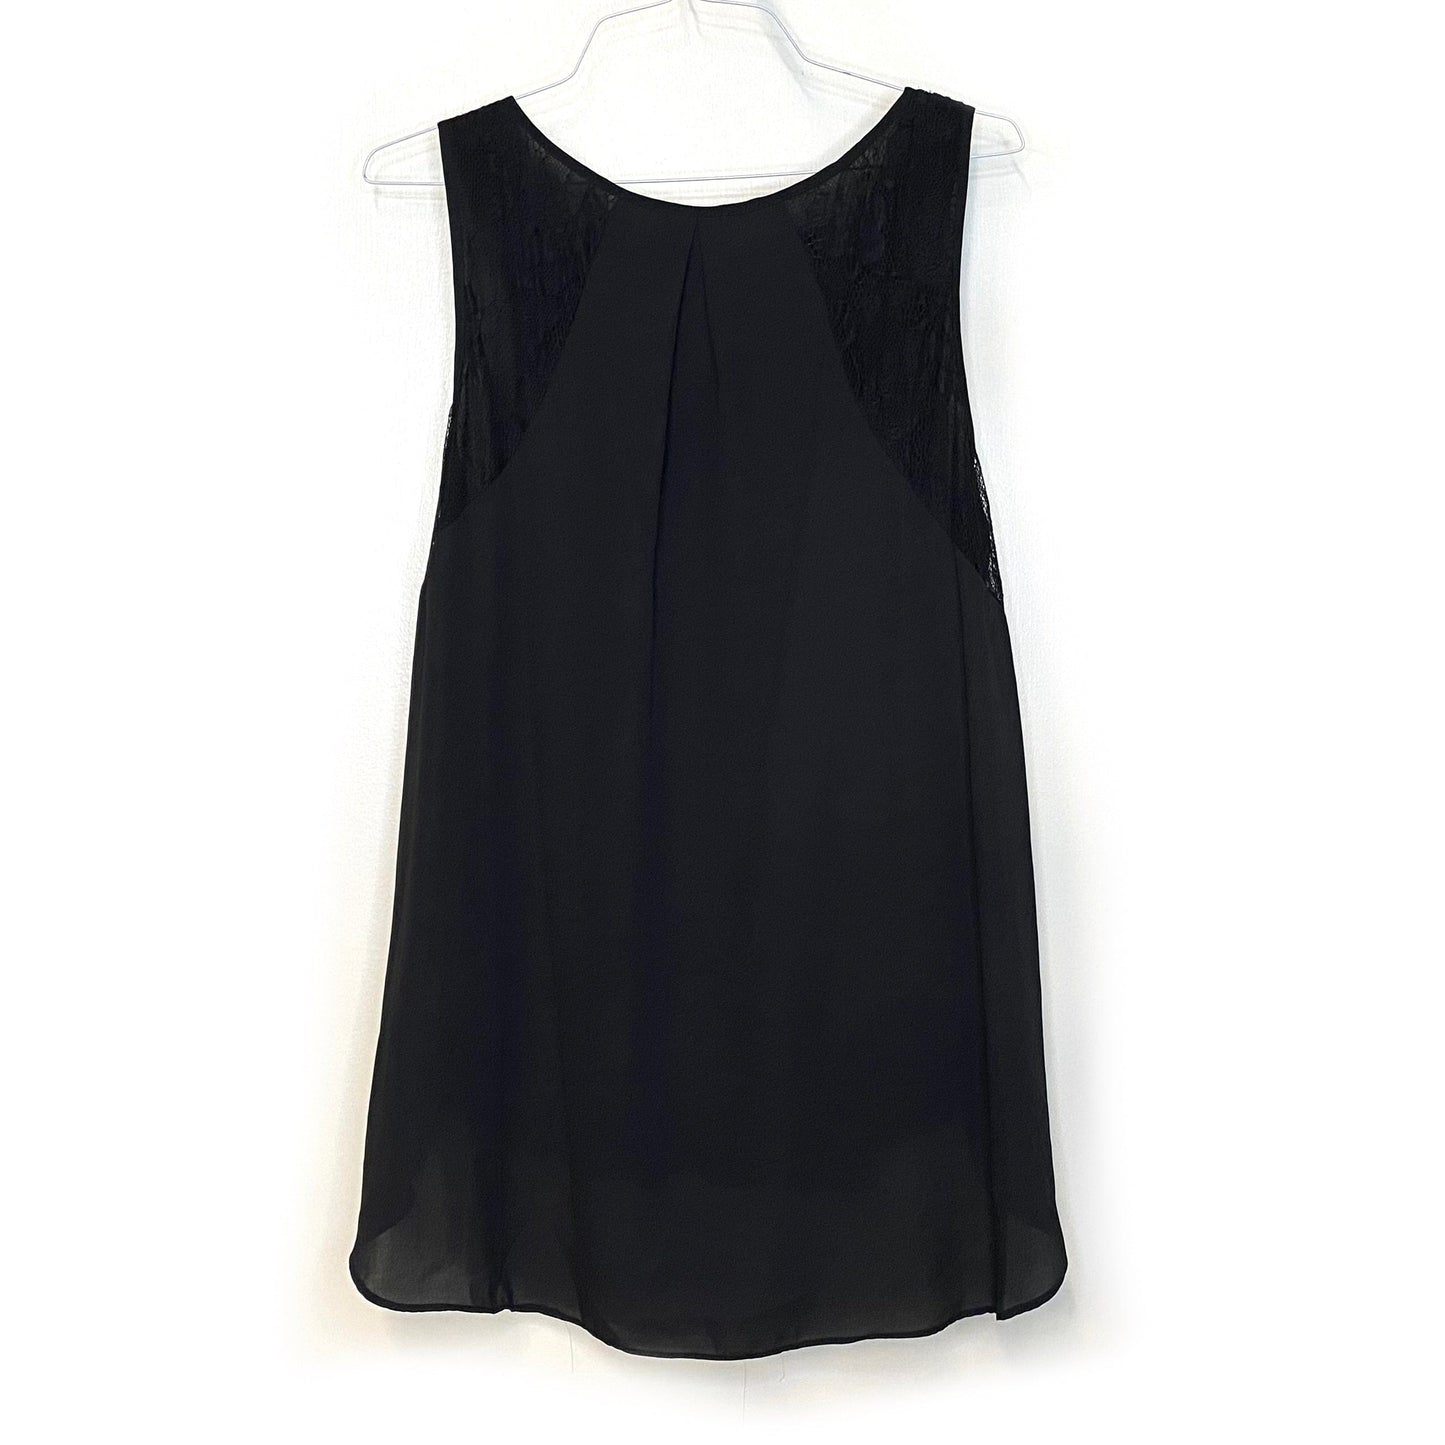 Neiman Marcus Womens Size L Black Sleeveless Lacey Top Shirt EUC